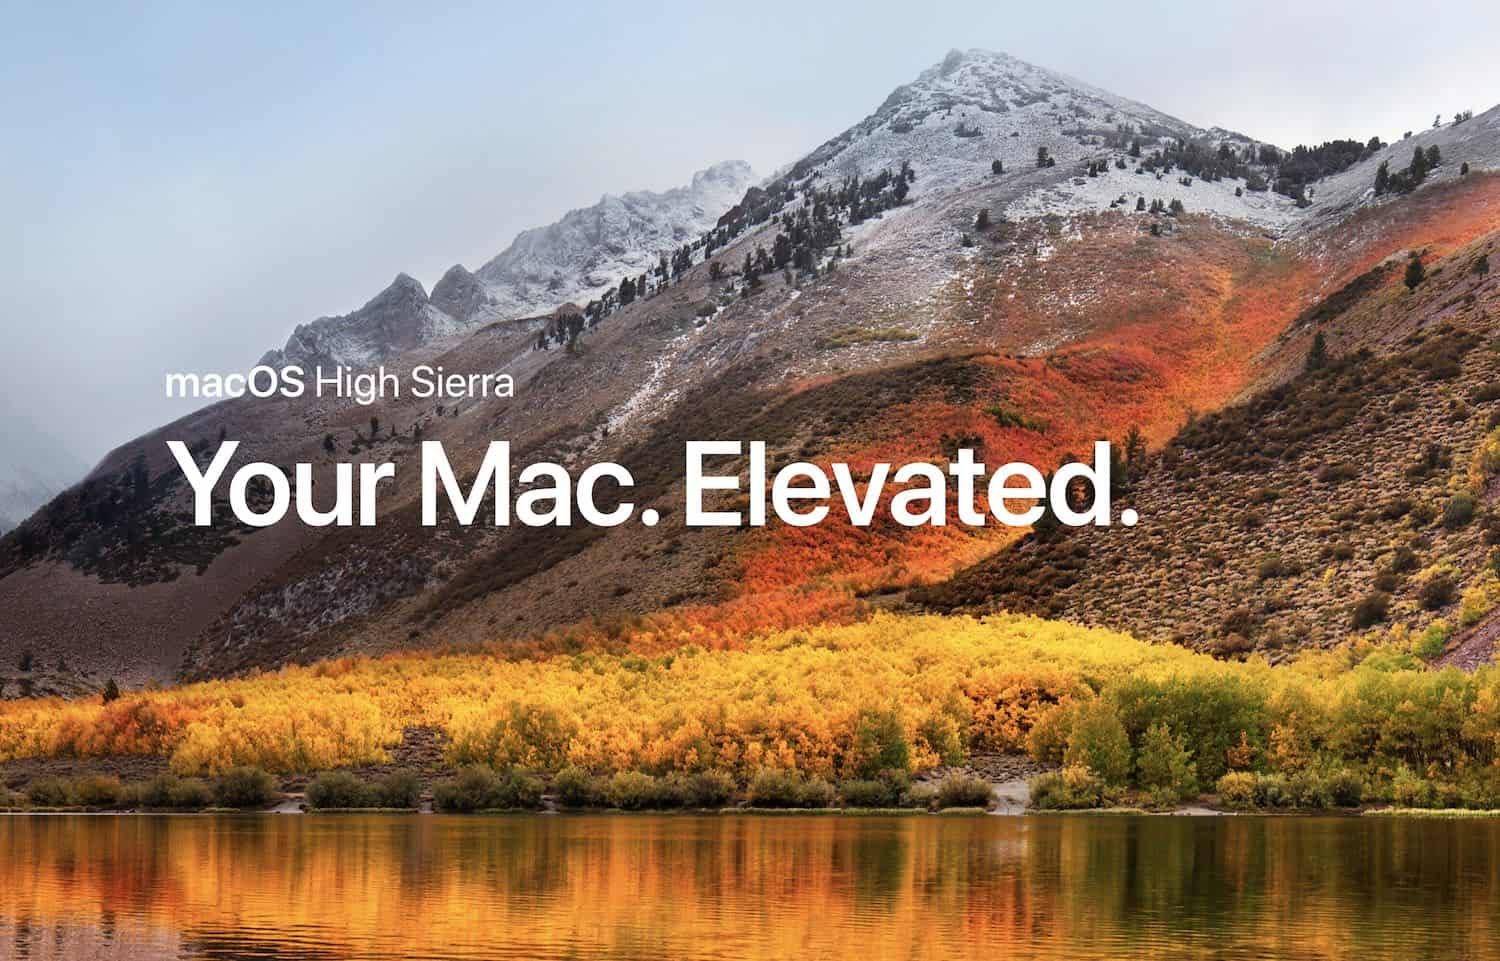 high sierra or safair is lastest version for mac